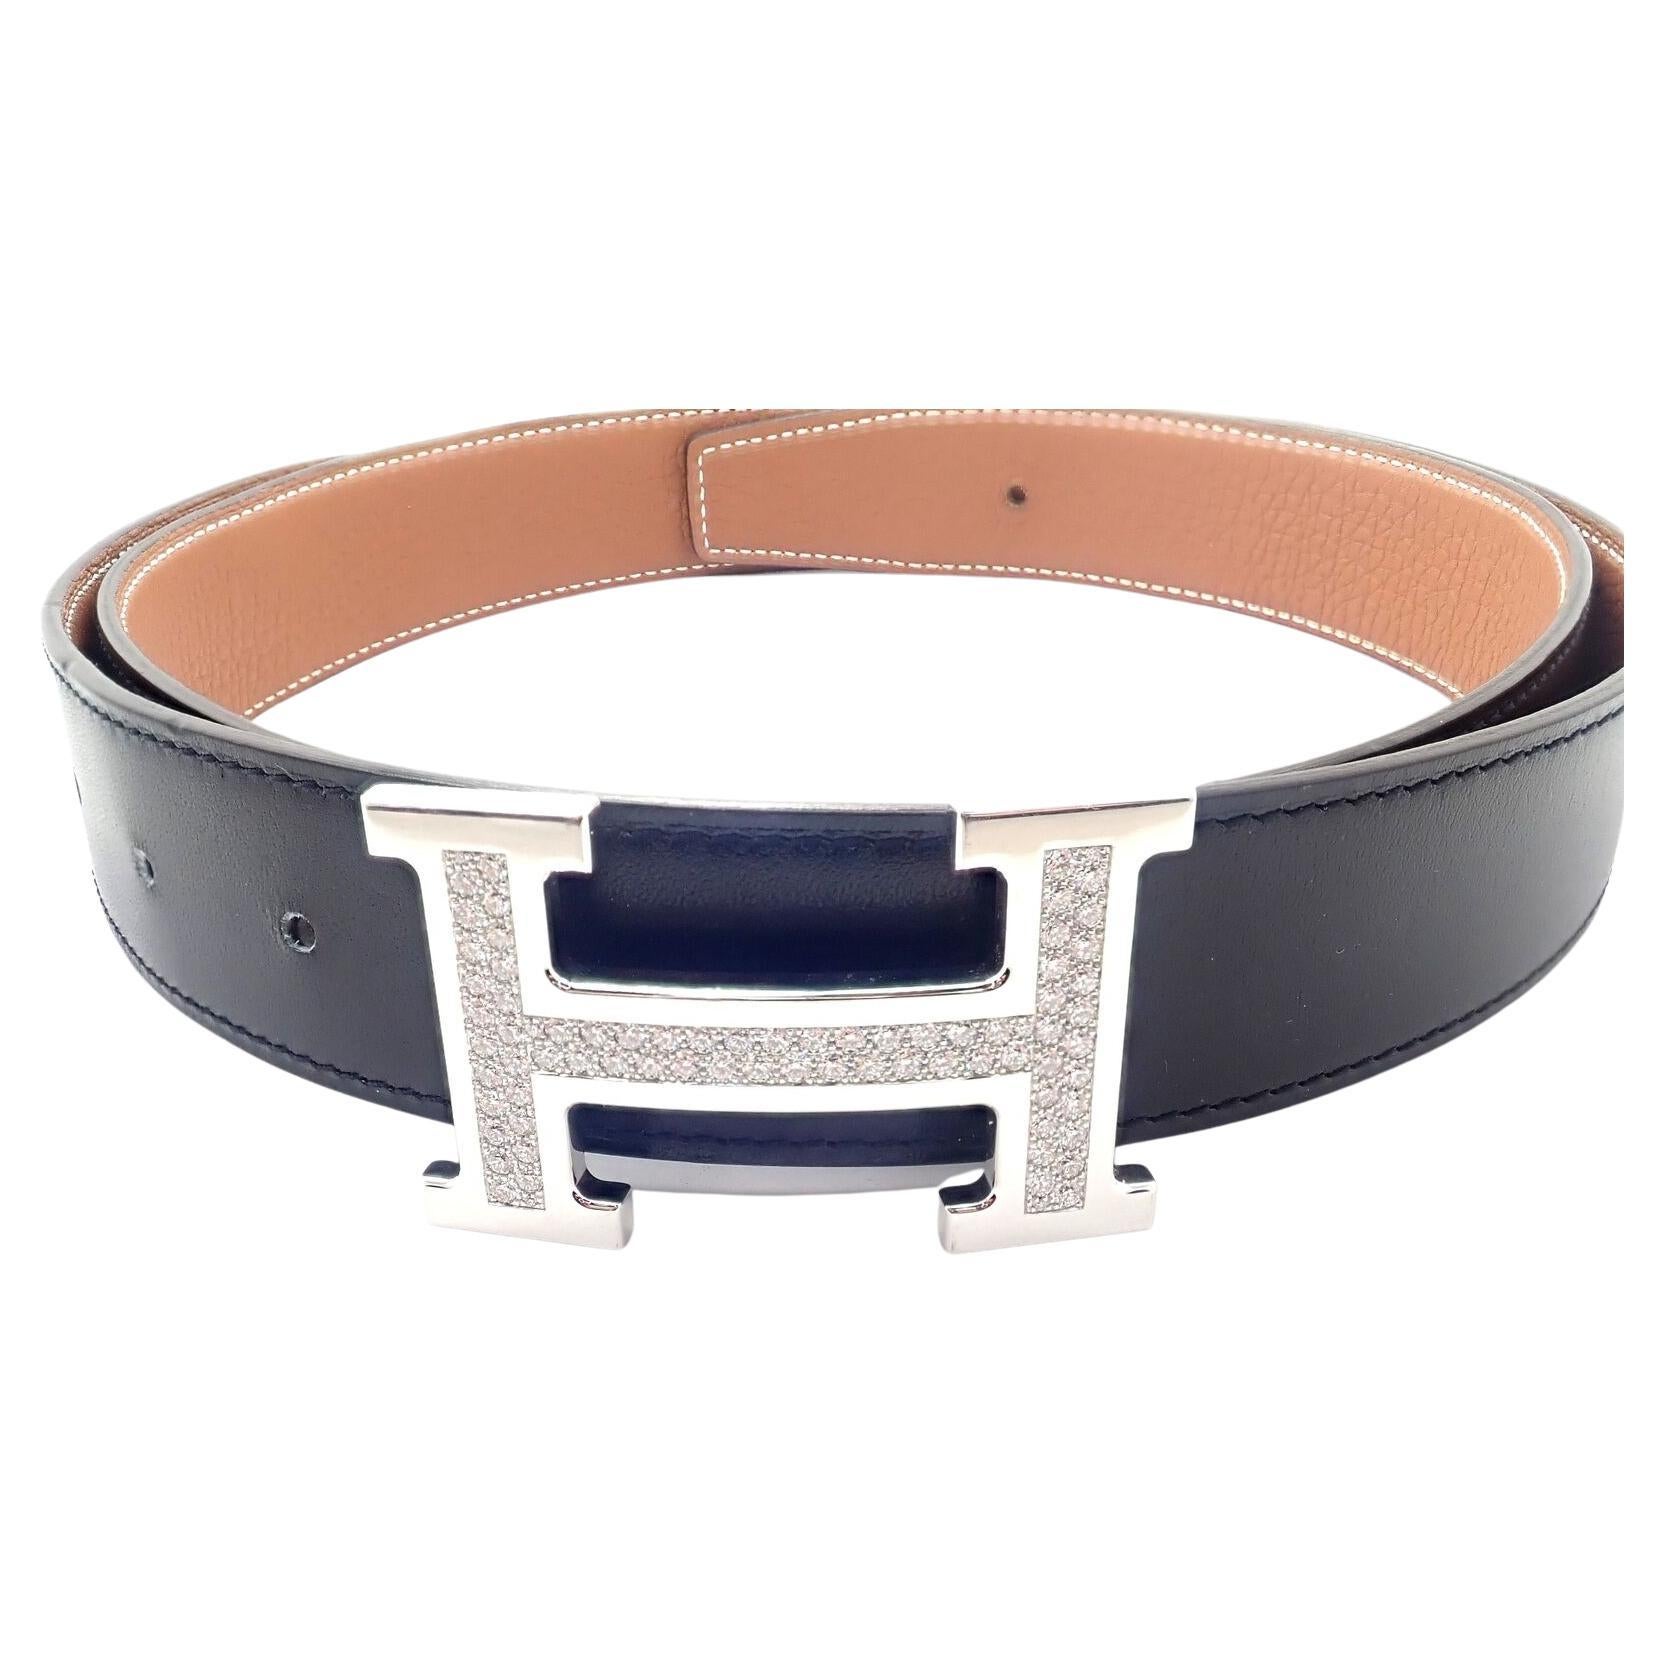 Handmade Leather Belt in Orange 32 mm 1.25 or 40 mm 1.57 Calfskin Reversible Belt with x Buckle As Personalized Belt Buckle